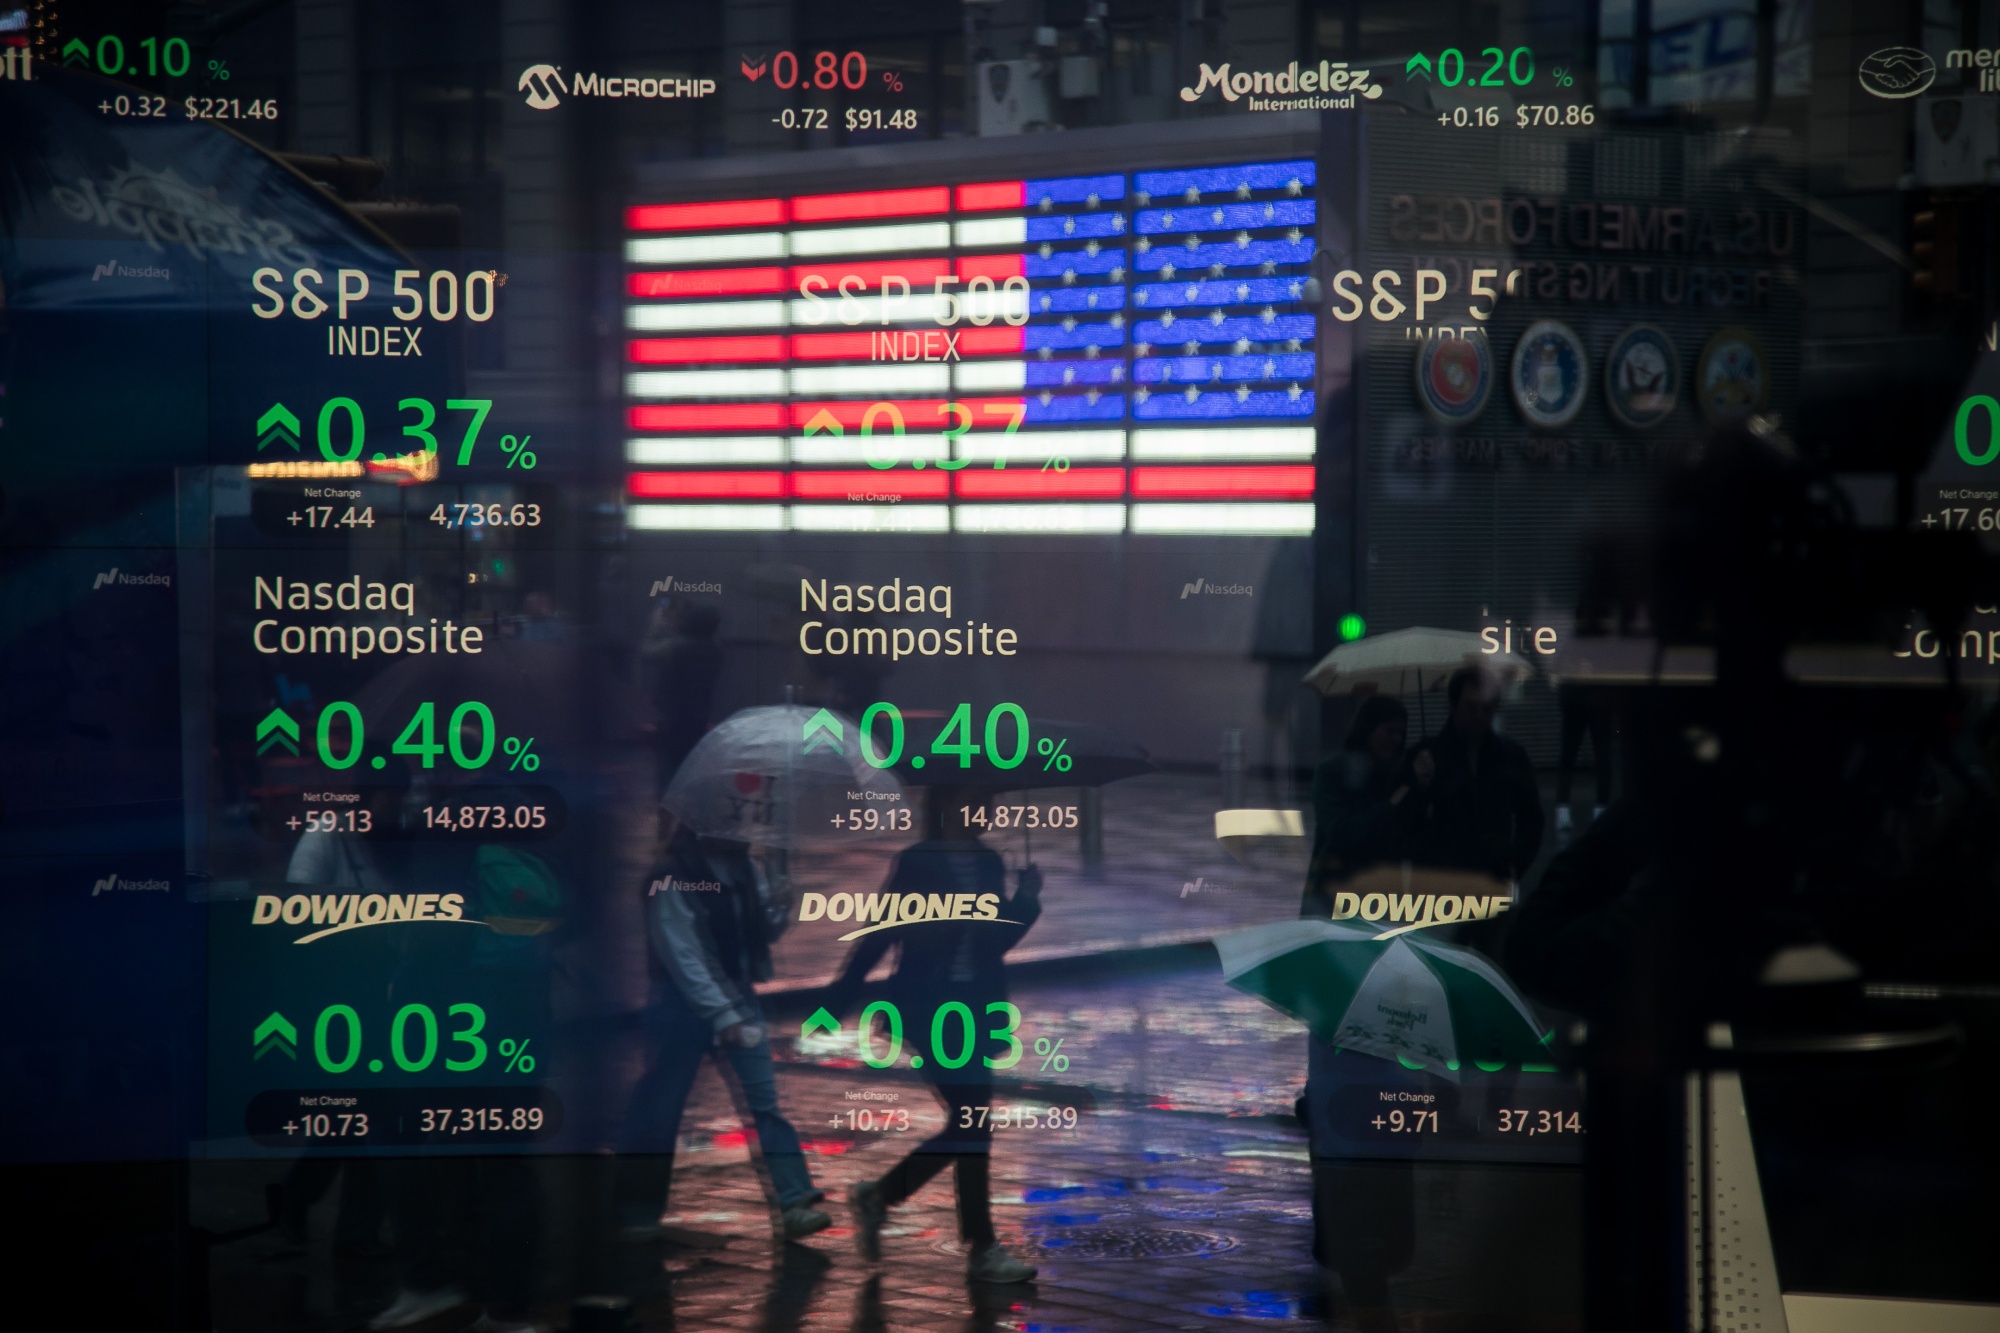 Stock market information at the Nasdaq MarketSite in New York.